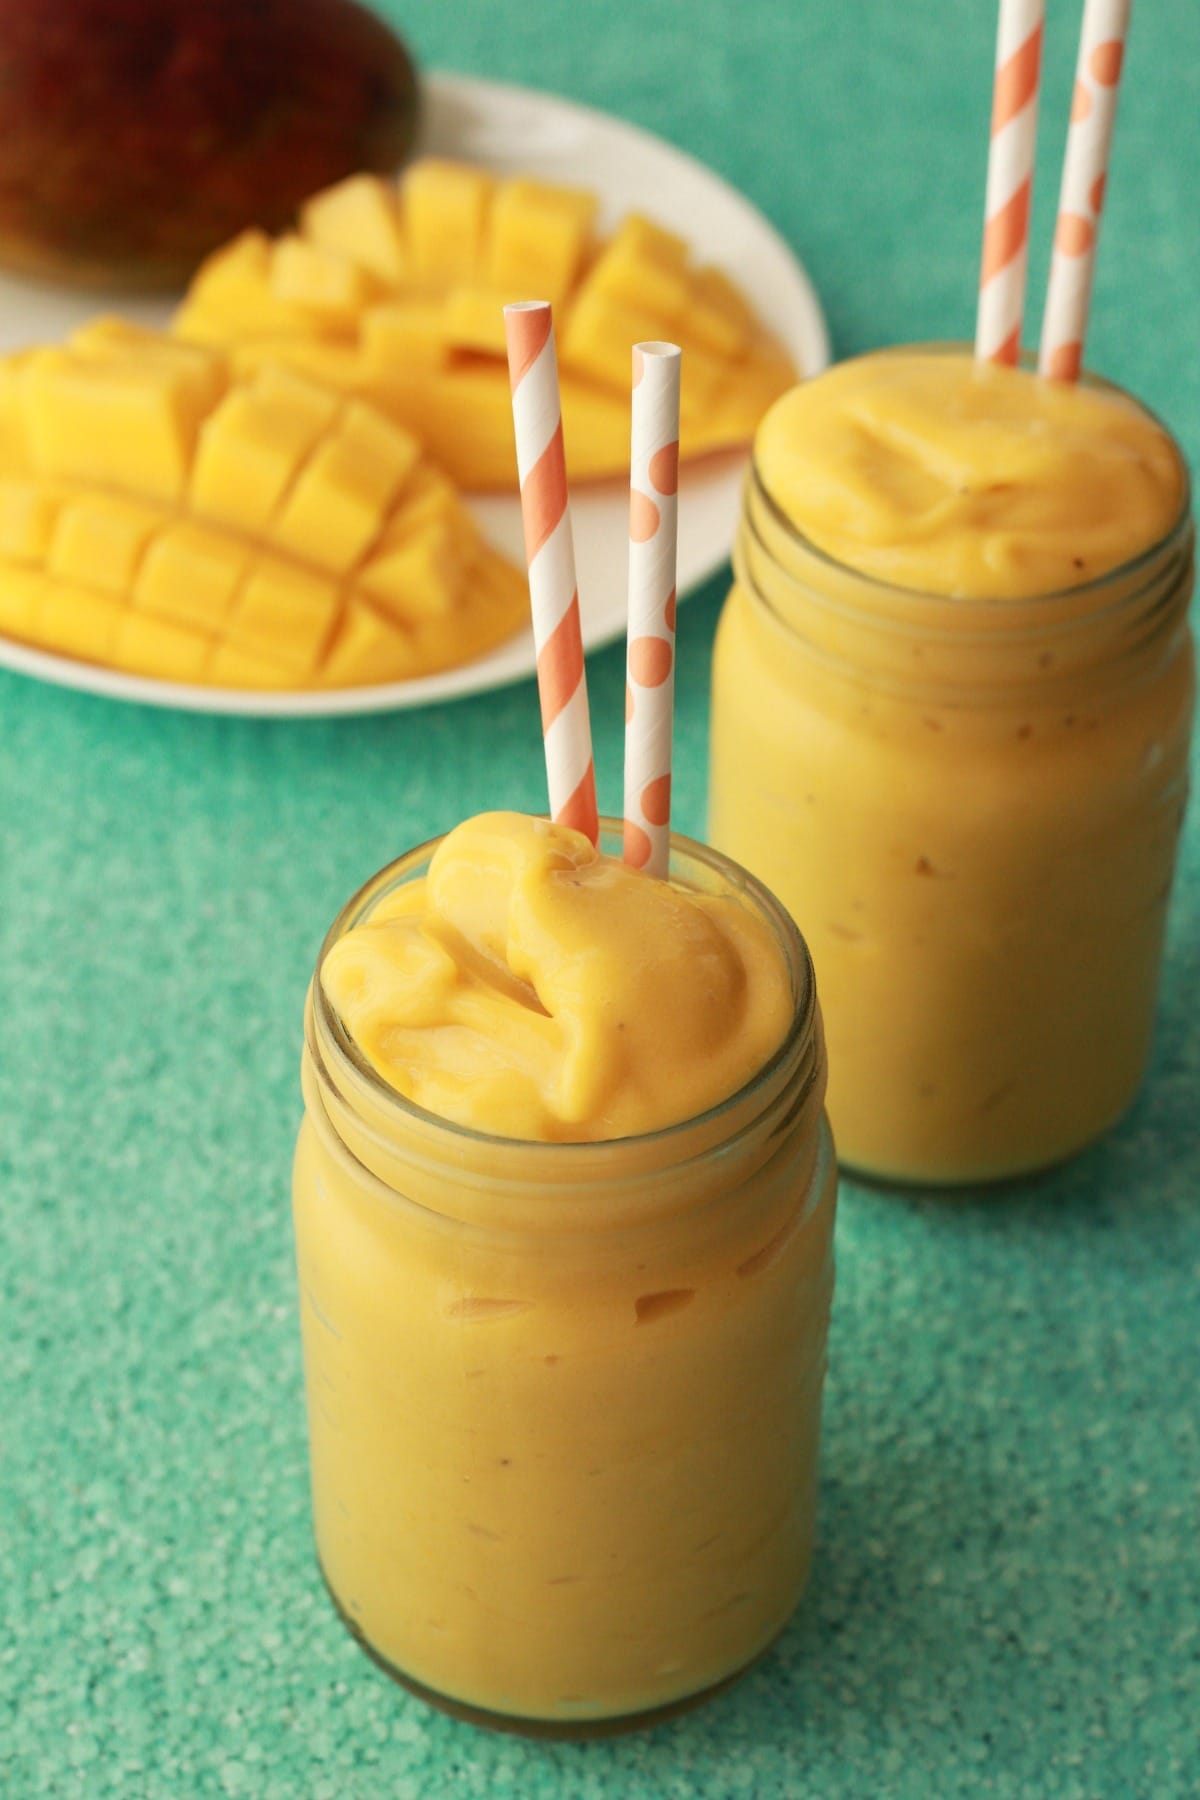 Mango smoothie in glasses with orange and white straws. 